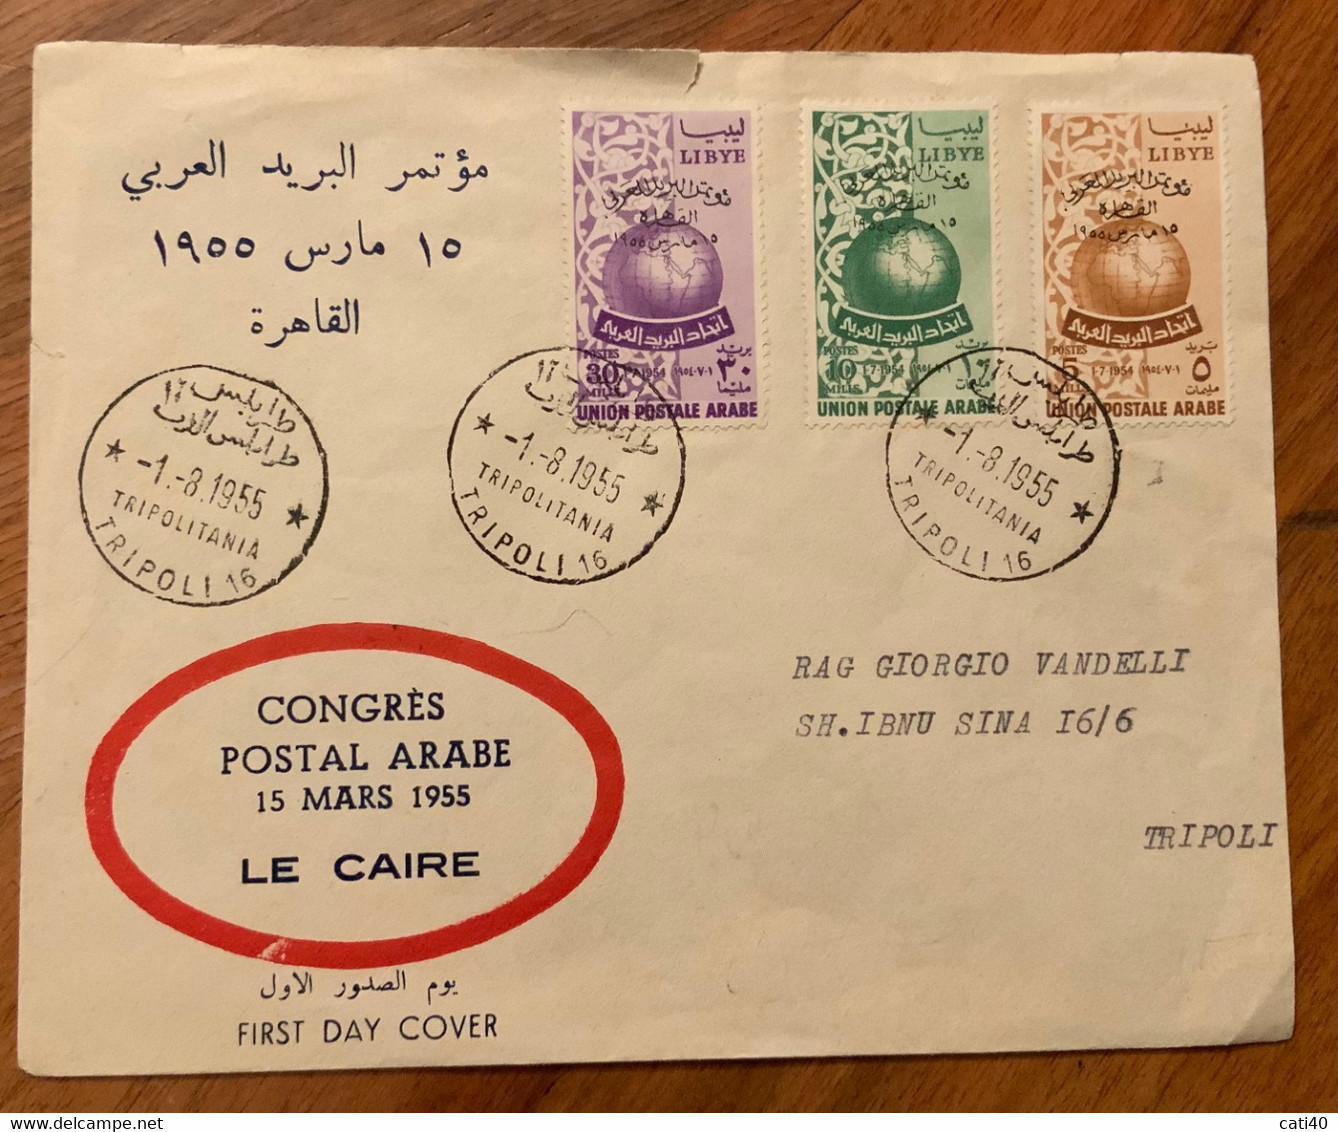 CONGRES POSTAL ARABE - 15 MARS 1955 LE CAIRE - TRIPOLITANIA TRIPOLI 1/8/1955 - Afrique Orientale